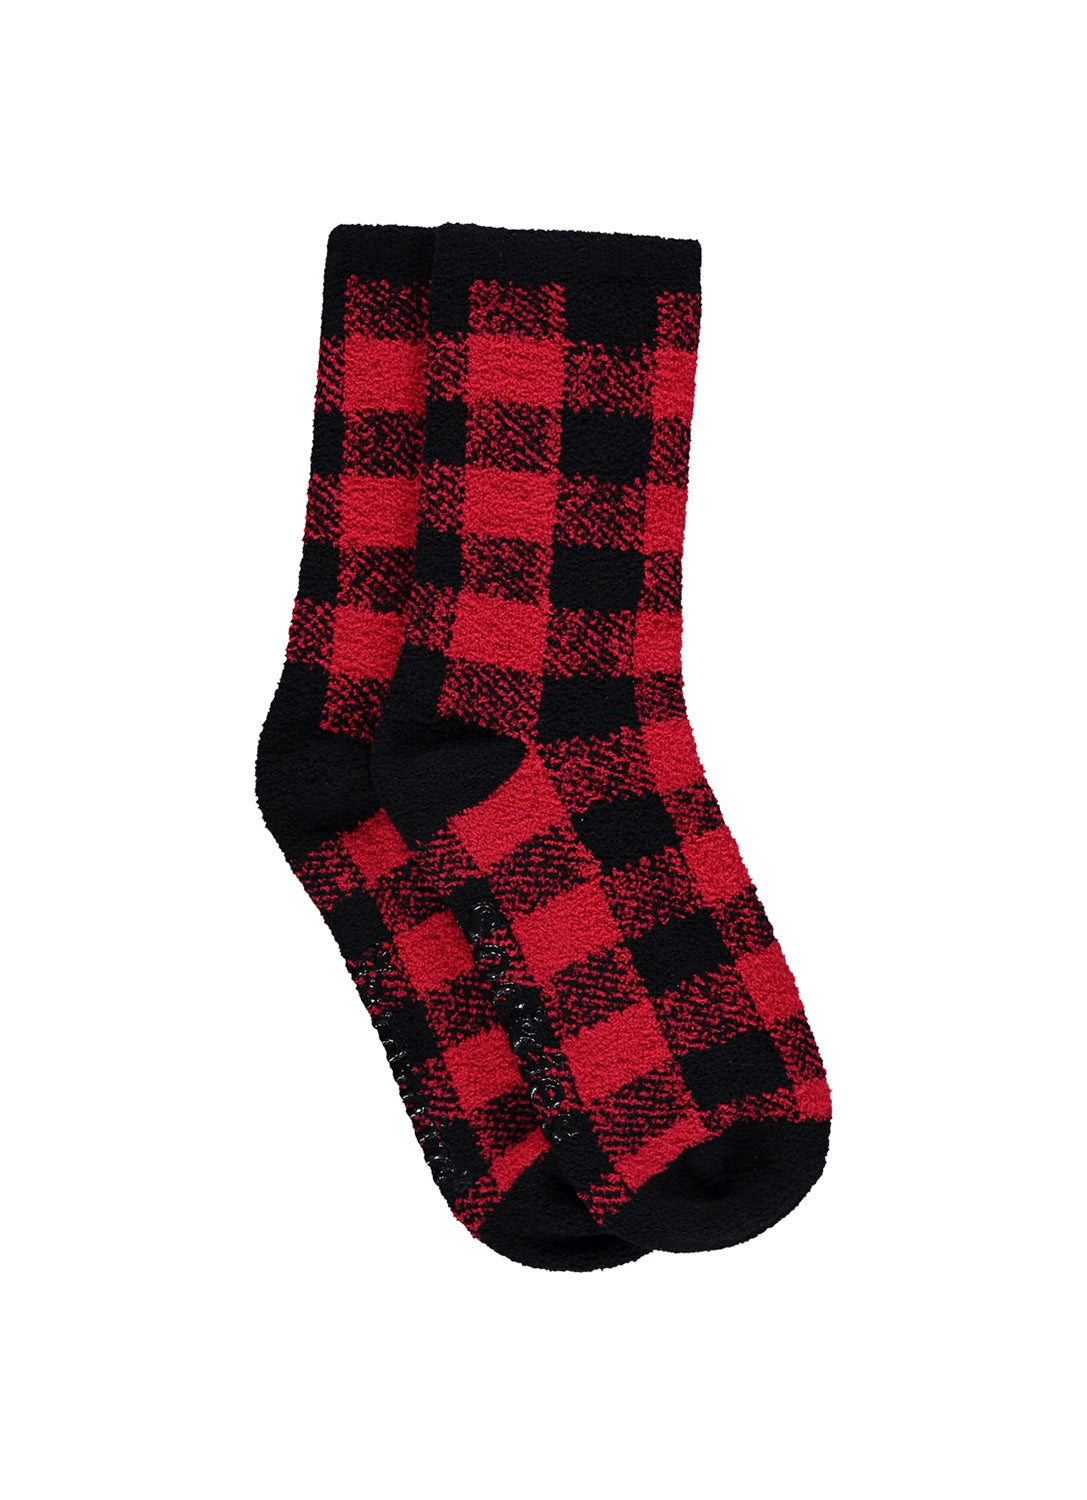 Mens Red Plaid Family Sleepwear Socks